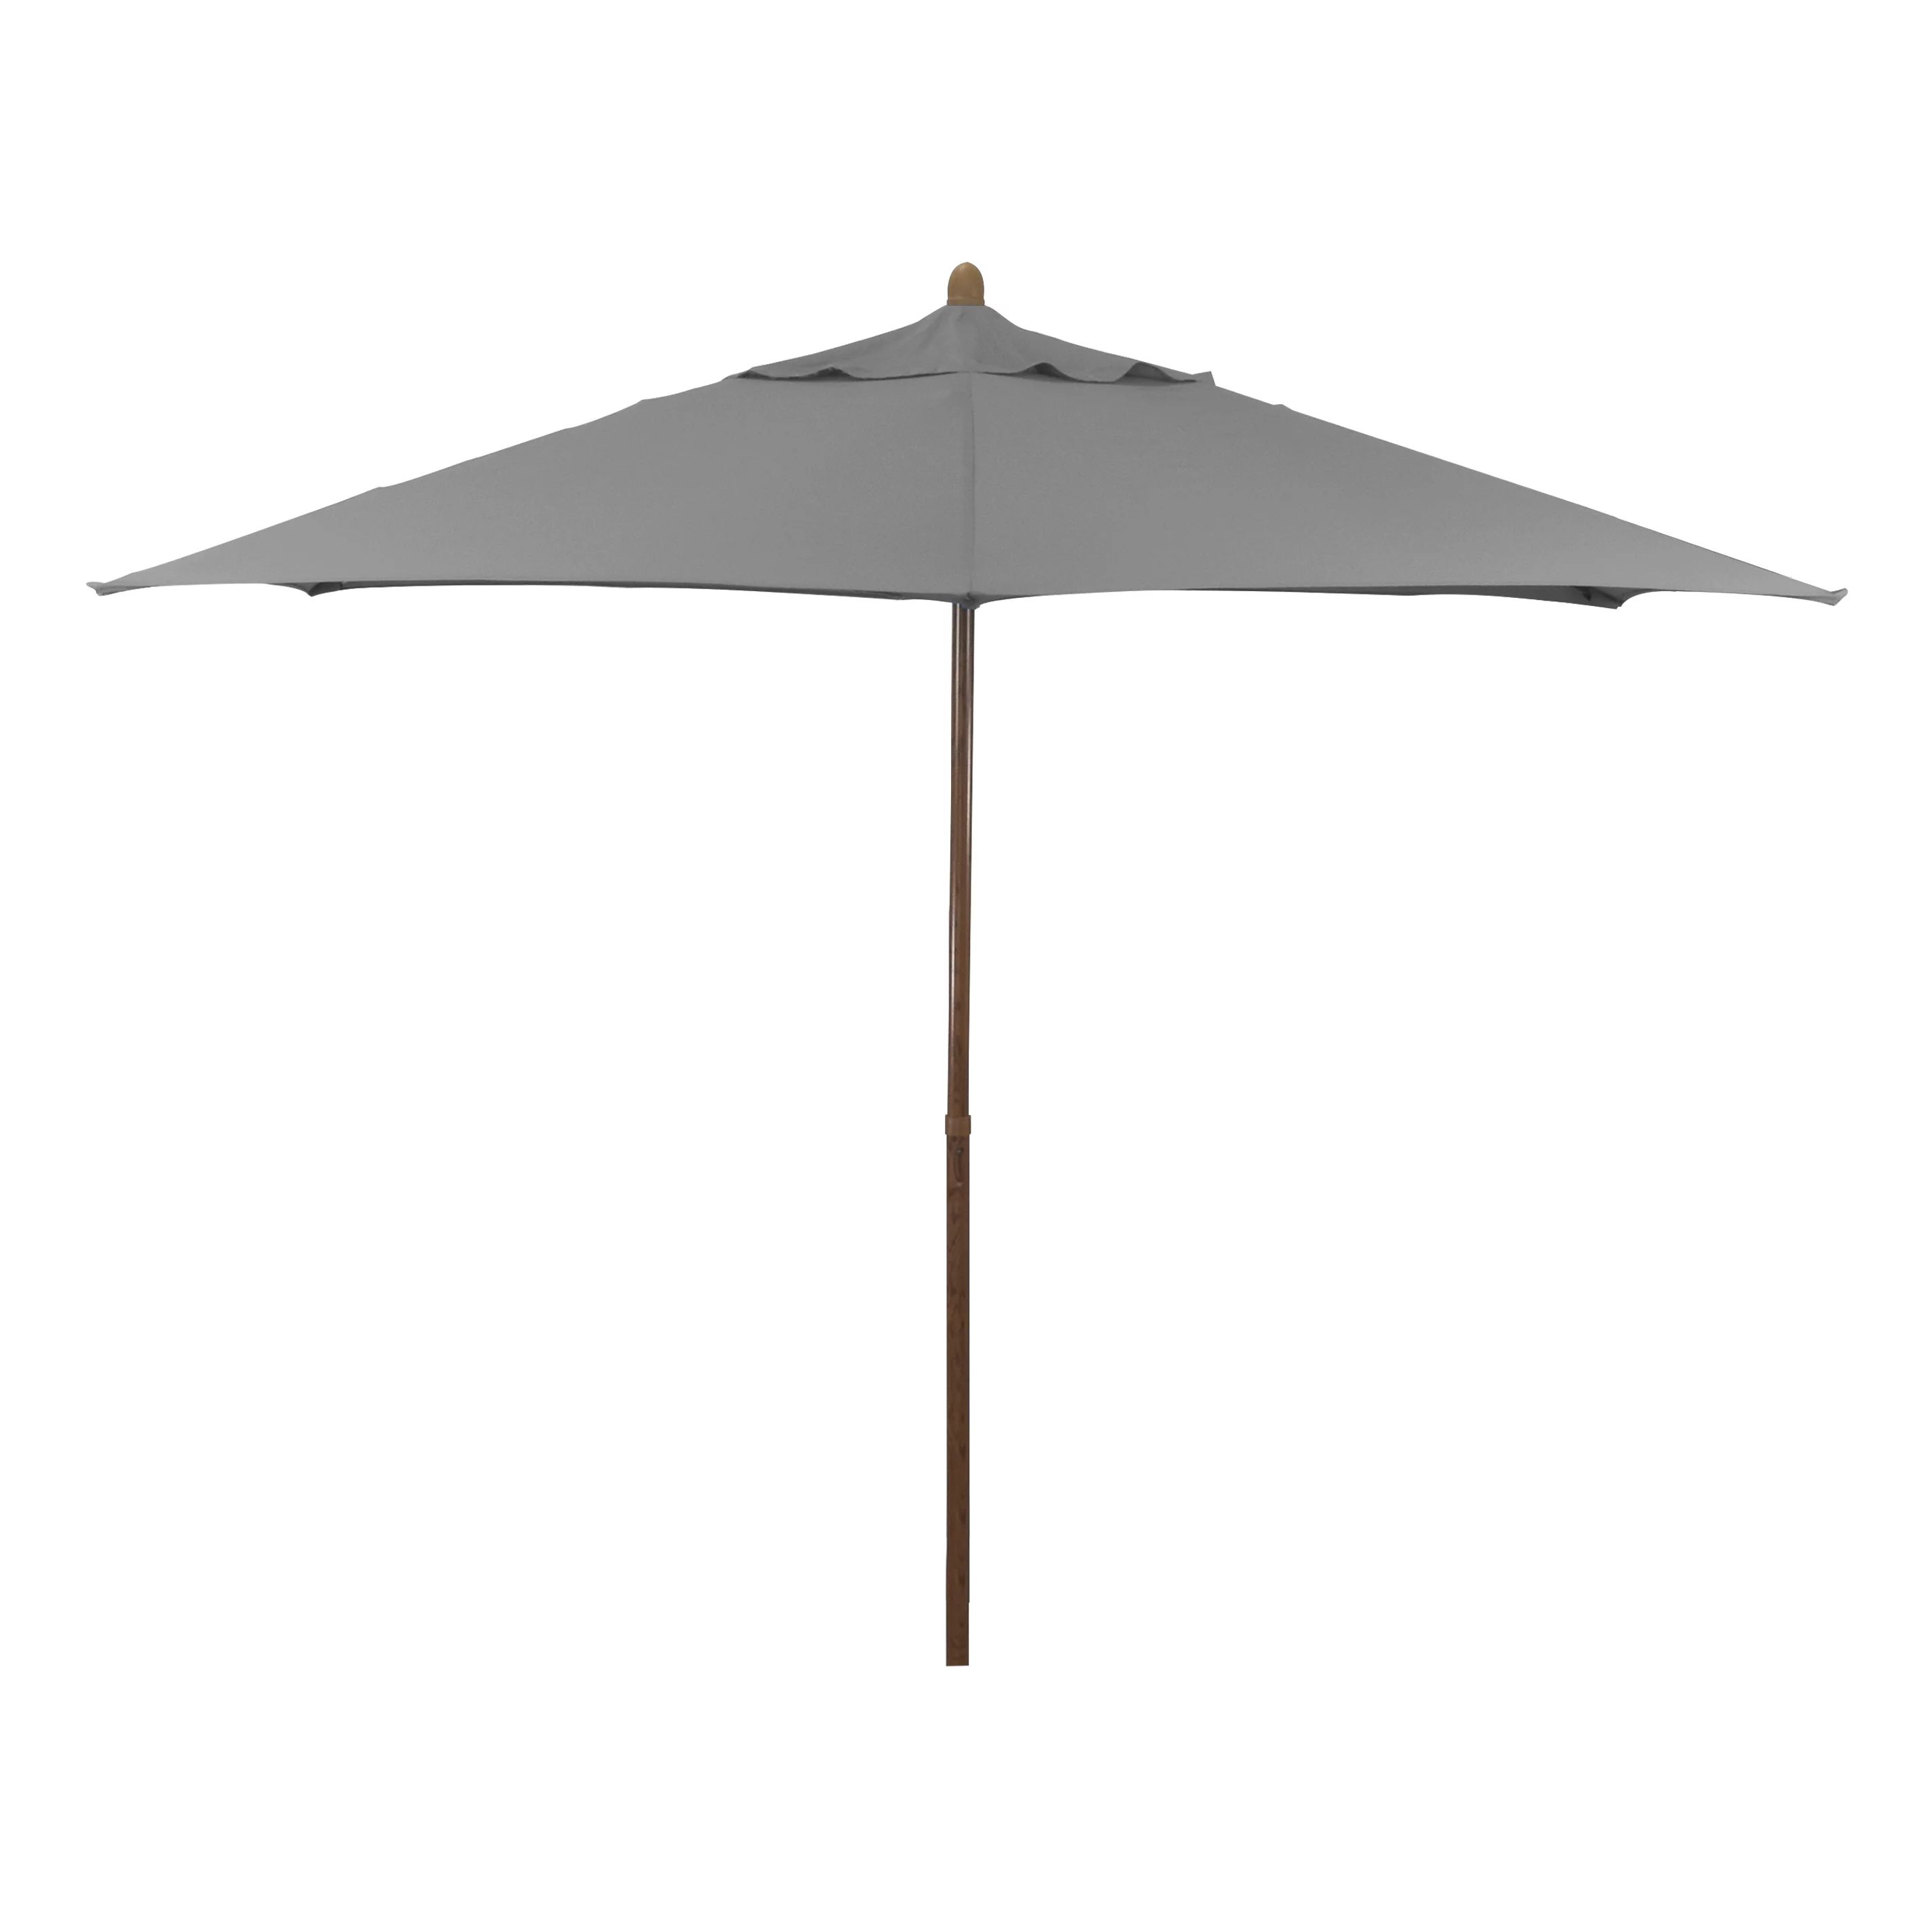 Astella 9’ Shade Essential Market Steel Wood-Grain Push-Lift Patio Umbrella in polyester taupe | Walmart (US)